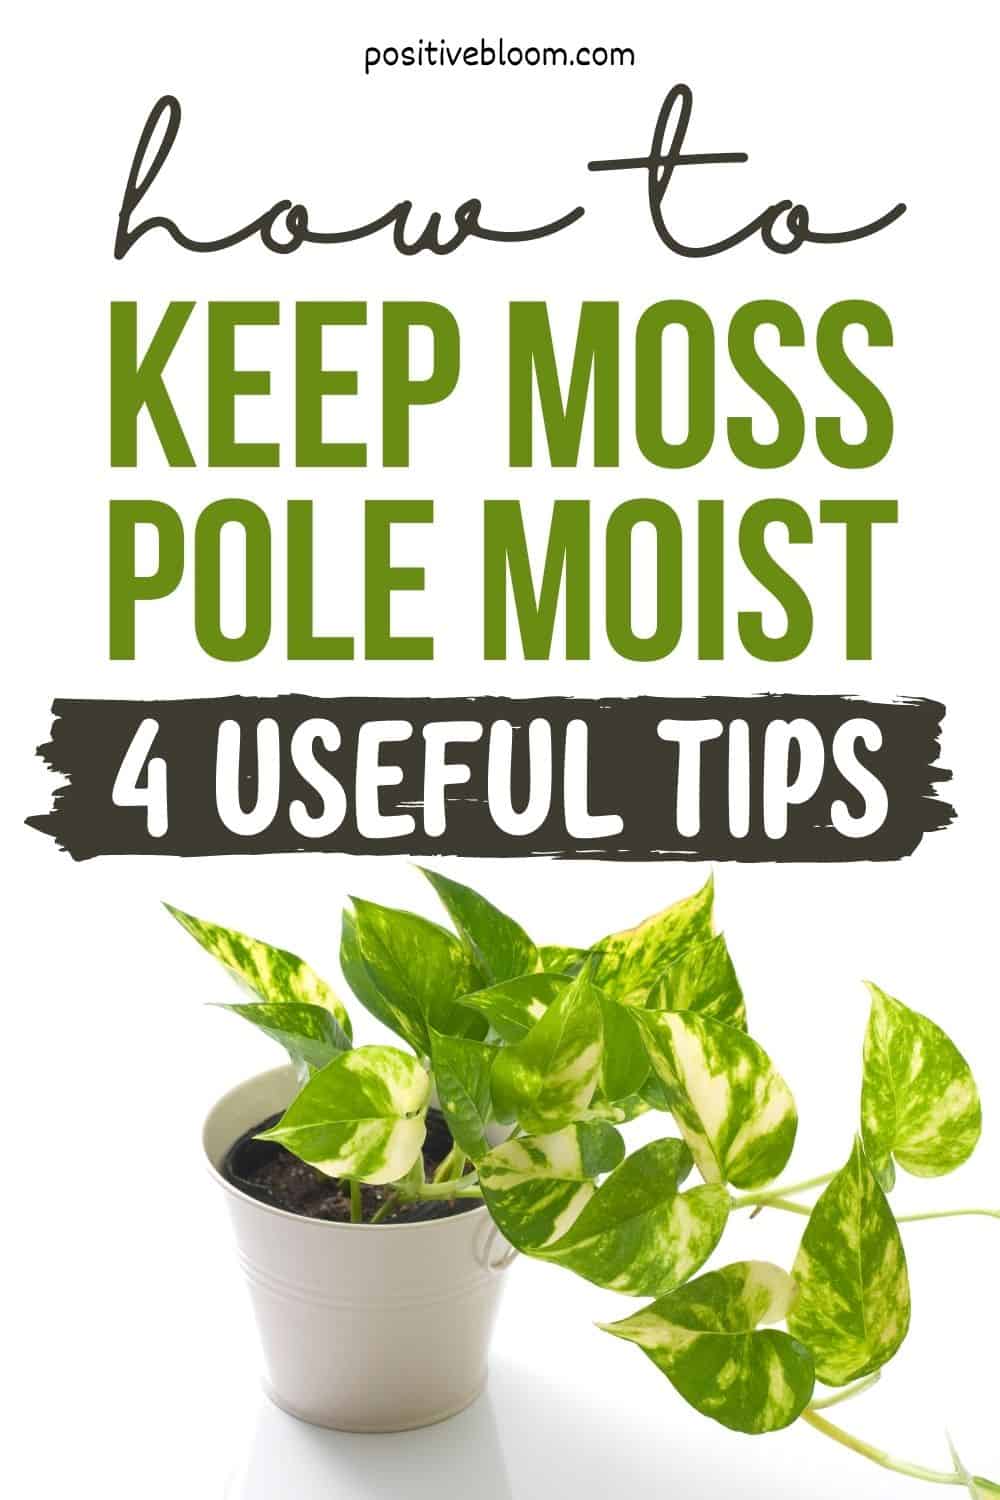 How To Keep Moss Pole Moist 4 Useful Tips Pinterest